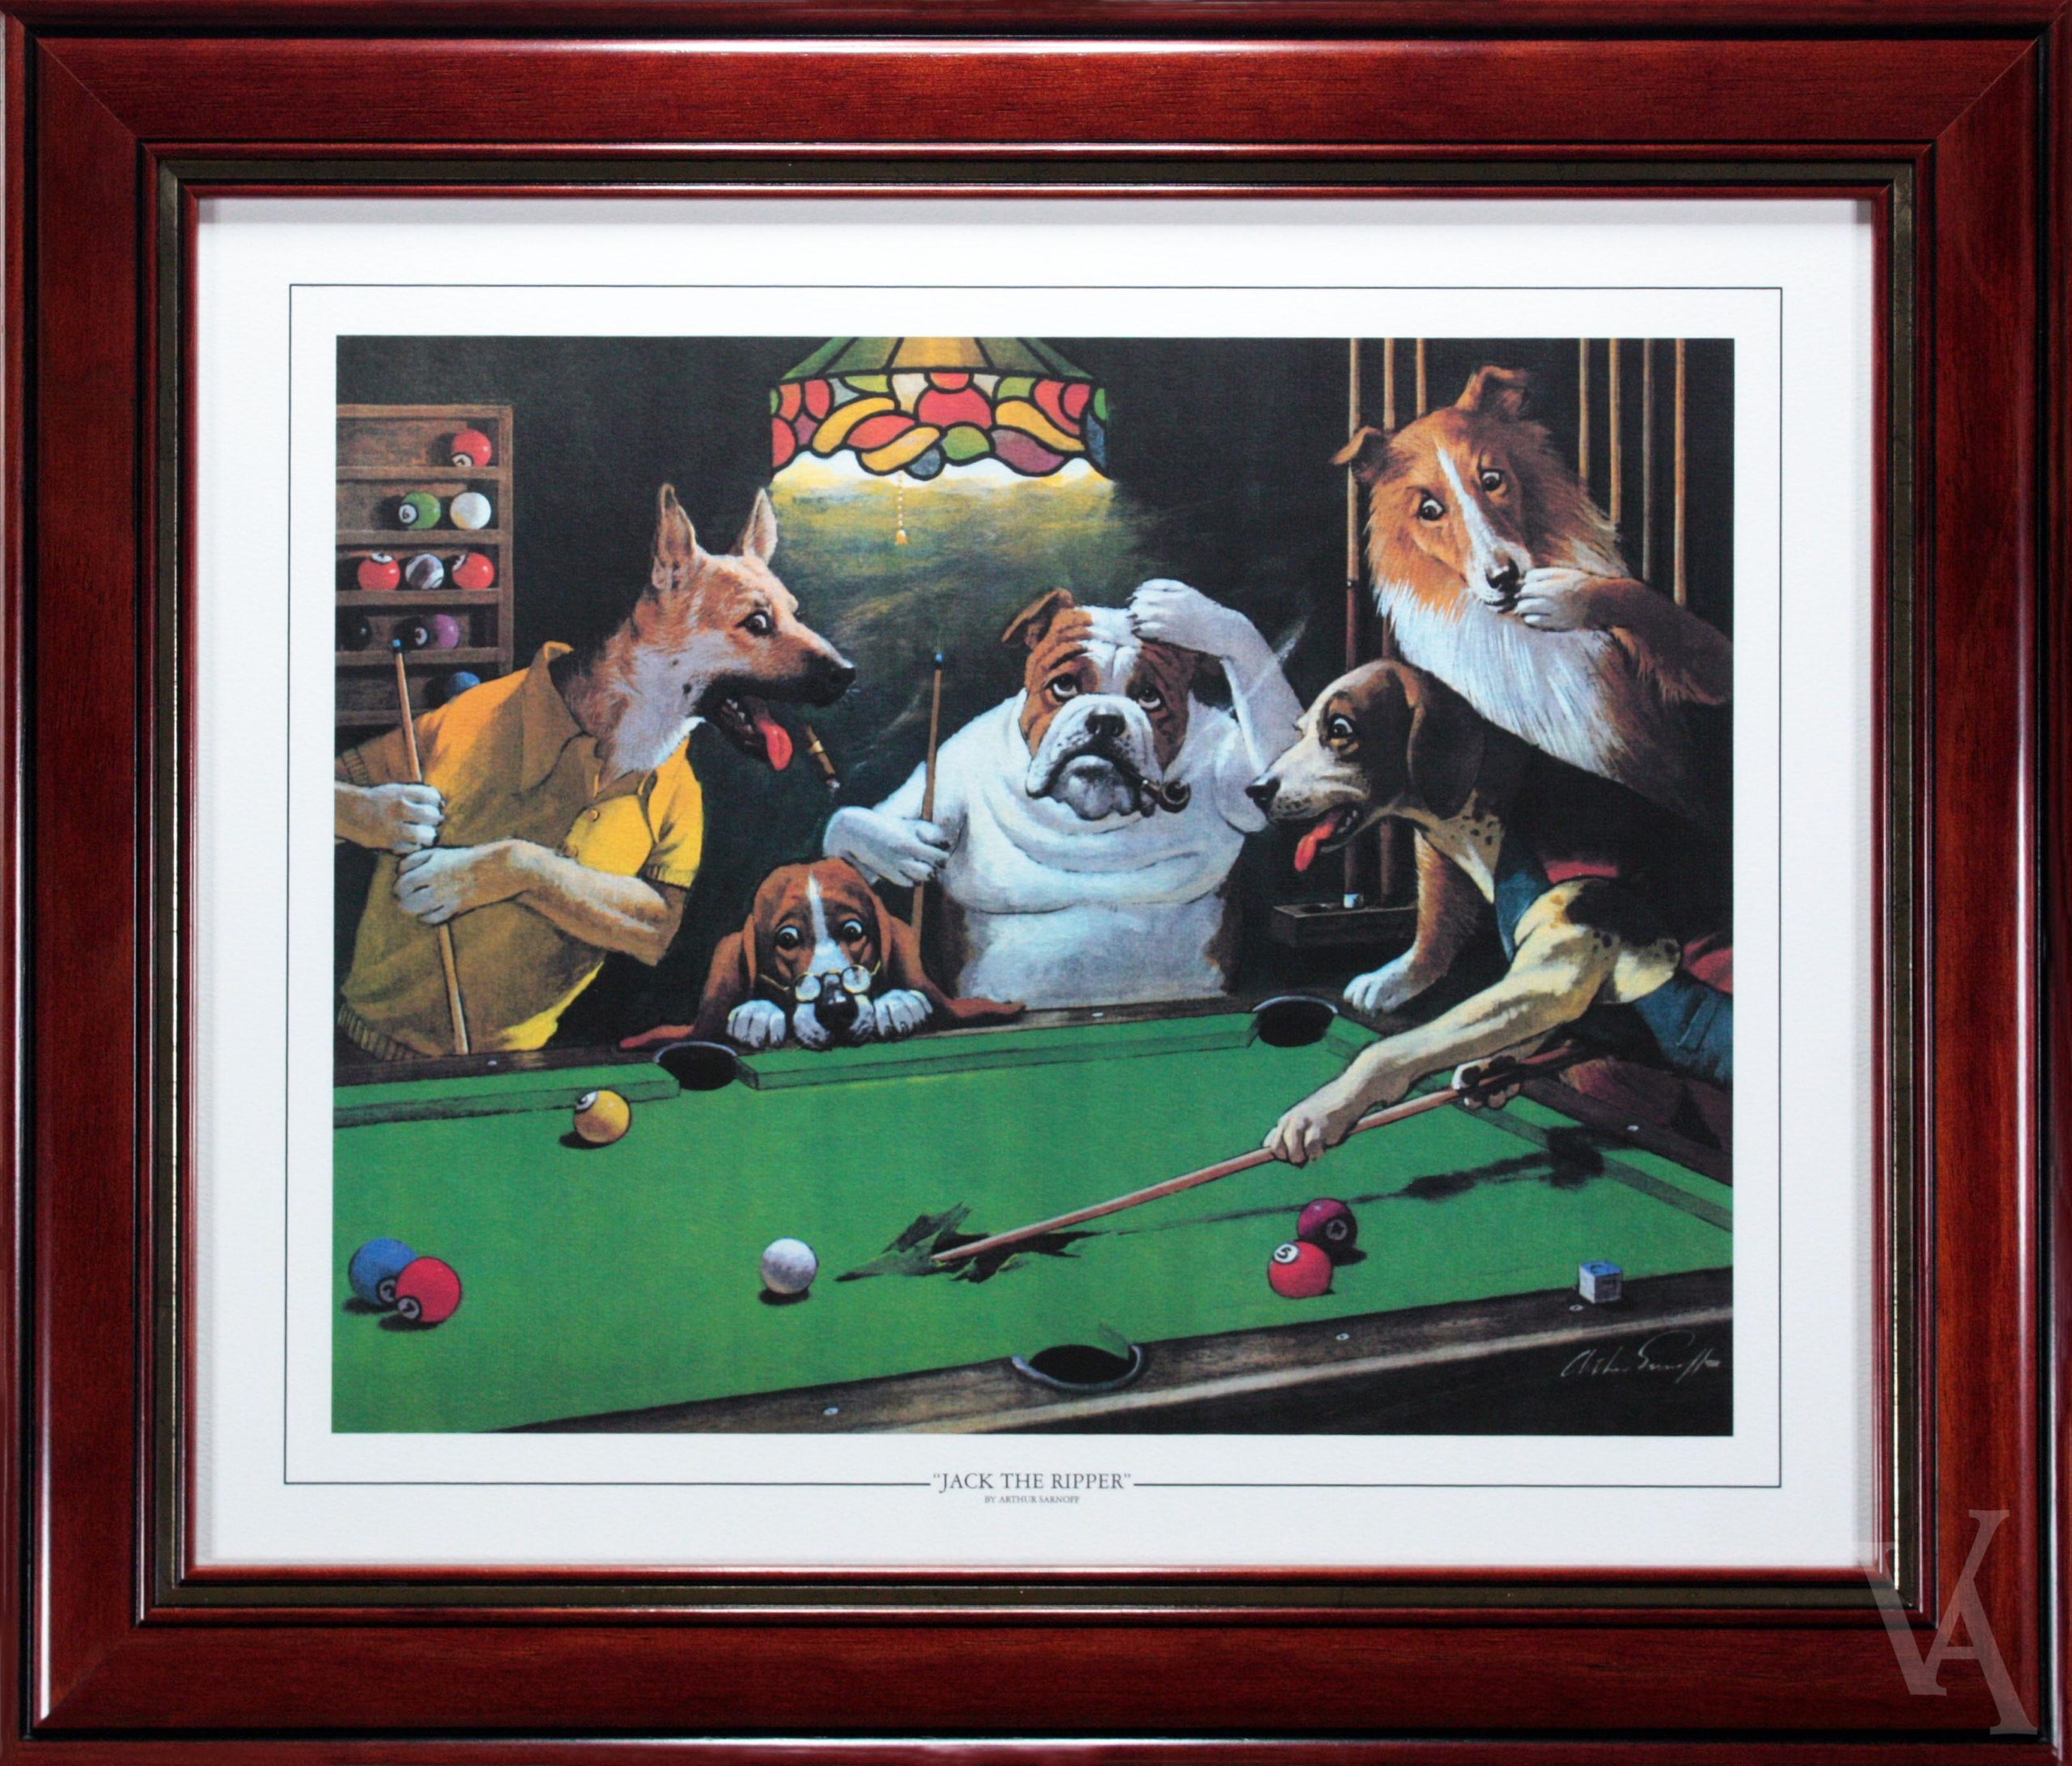 Snooker Dogs billard room framed poster print memorabilia. Jack The Ripper snooker dogs collection.